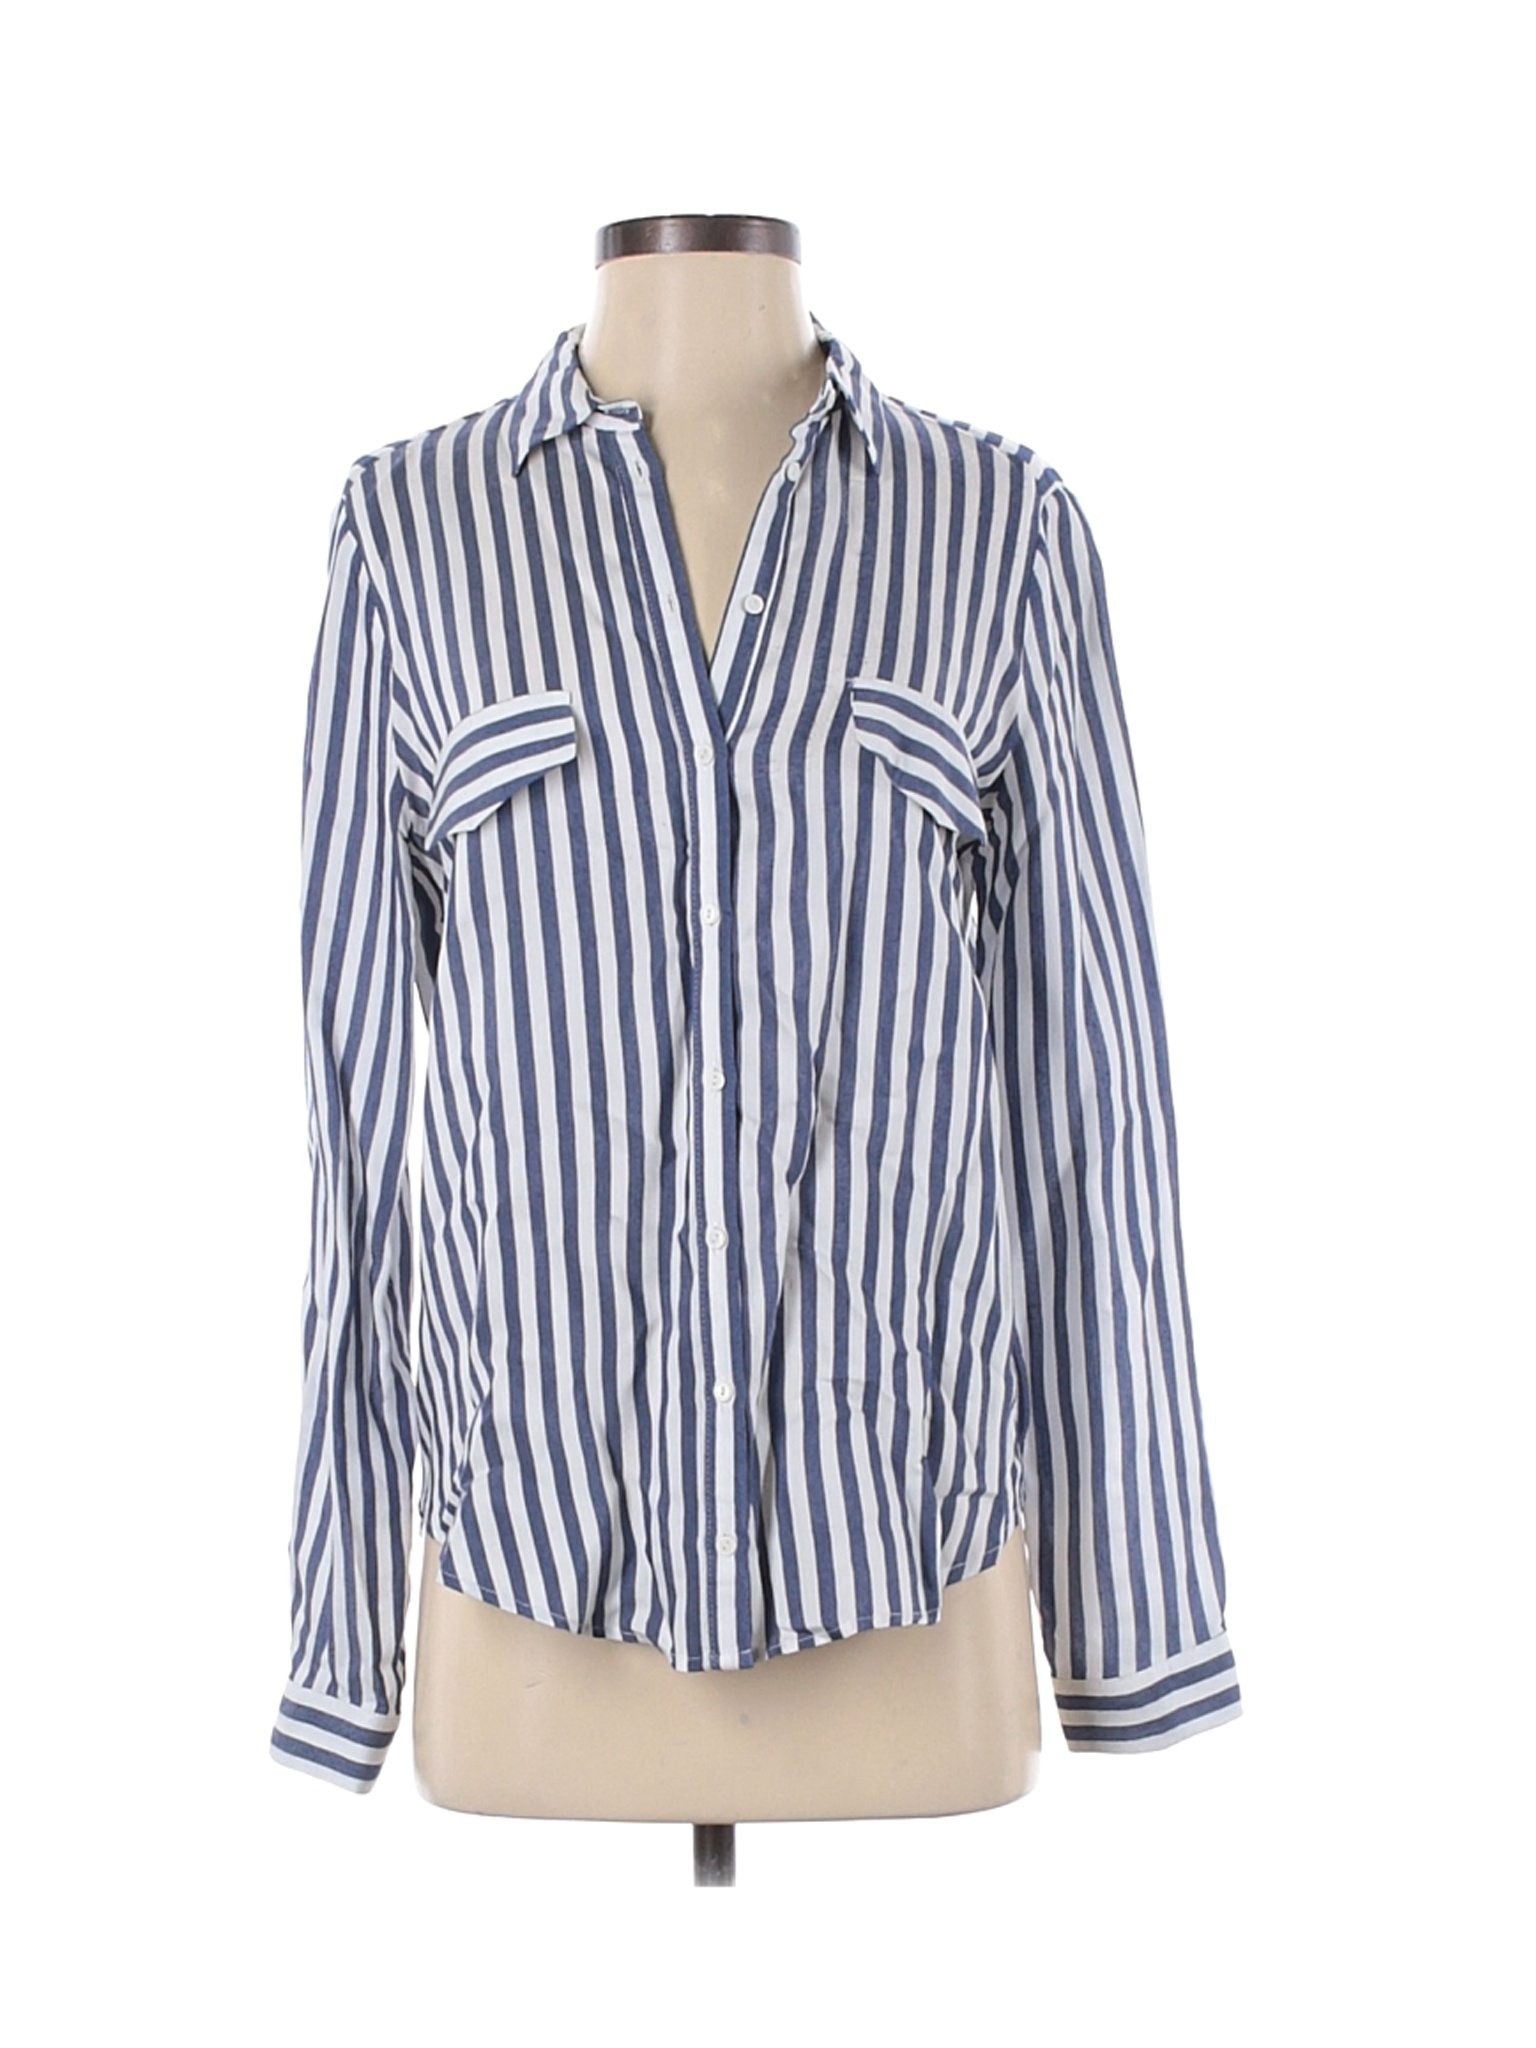 Zara Basic Women Blue Long Sleeve Button-Down Shirt S | eBay